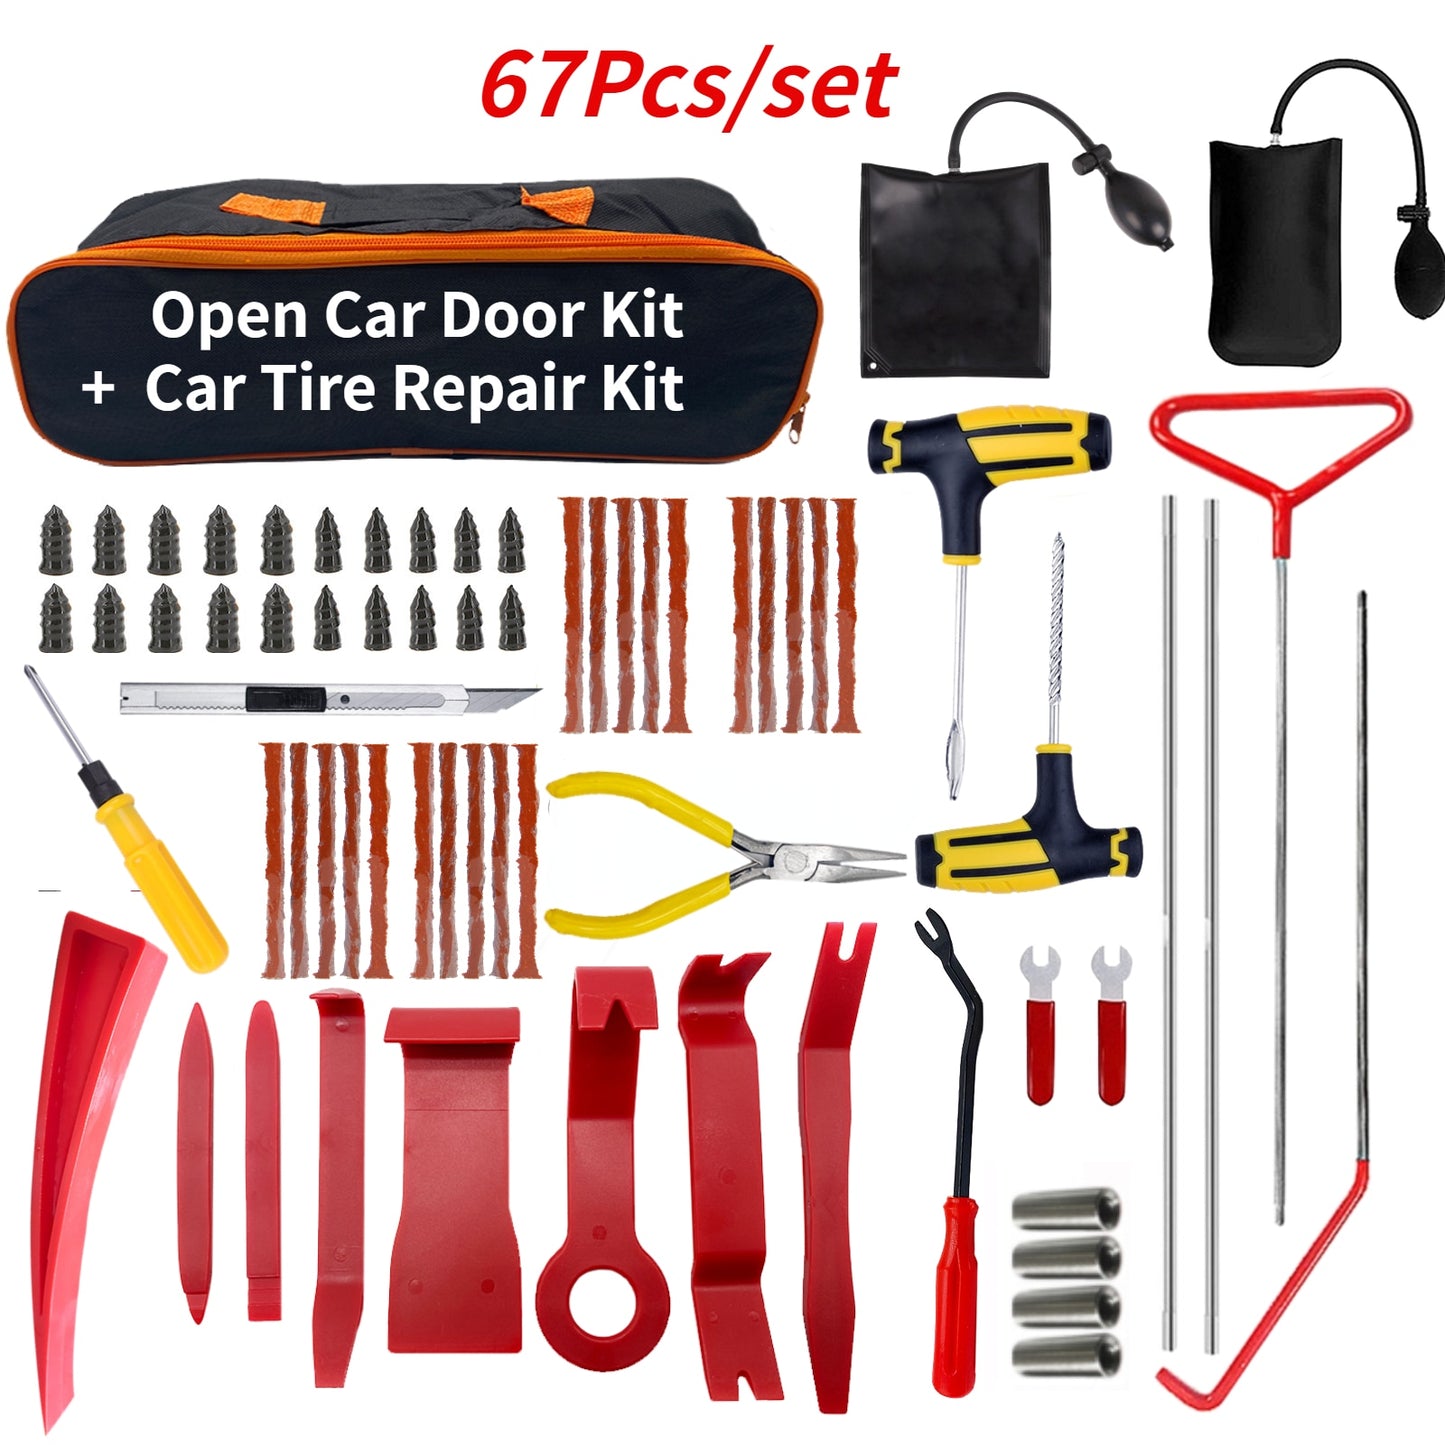 New Car Wedge Pump Locksmith Thickened Door Repair Air Cushion Emergency Open Unlock Tool Kit With Long Reach Grabber